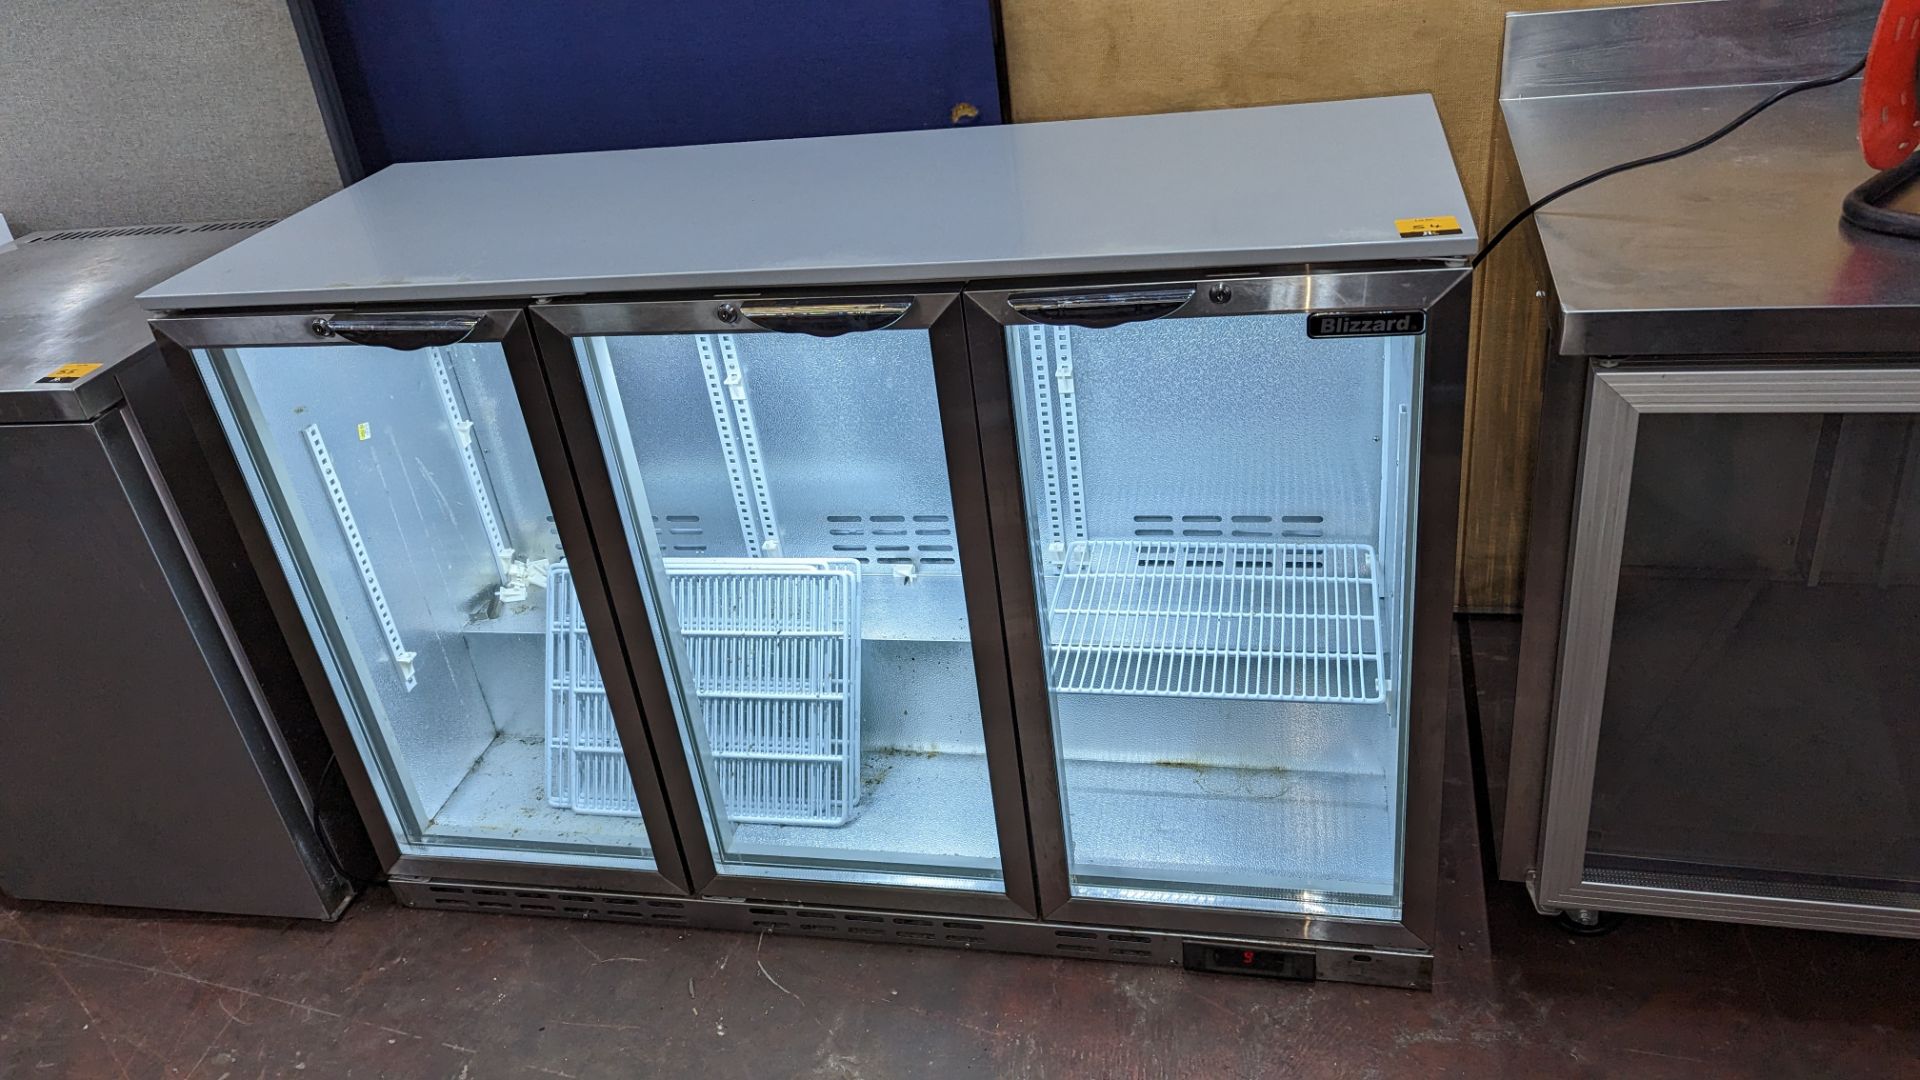 Blizzard stainless steel & glass 3 door back bar bottle fridge/cooler. Understood to have been purc - Image 3 of 7